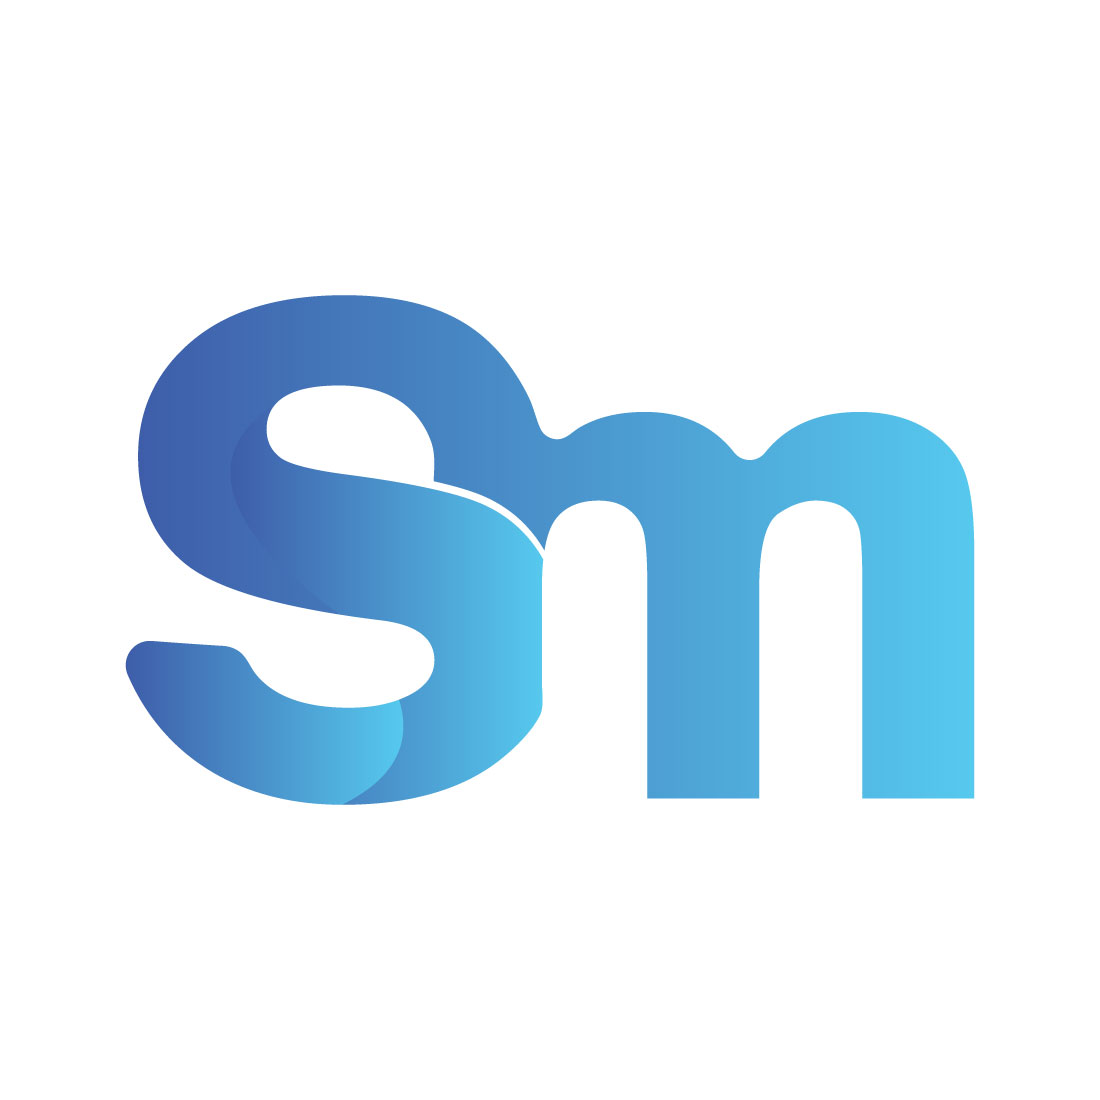 SM logo | Graphic design logo, Logo design creative, Simple logo design